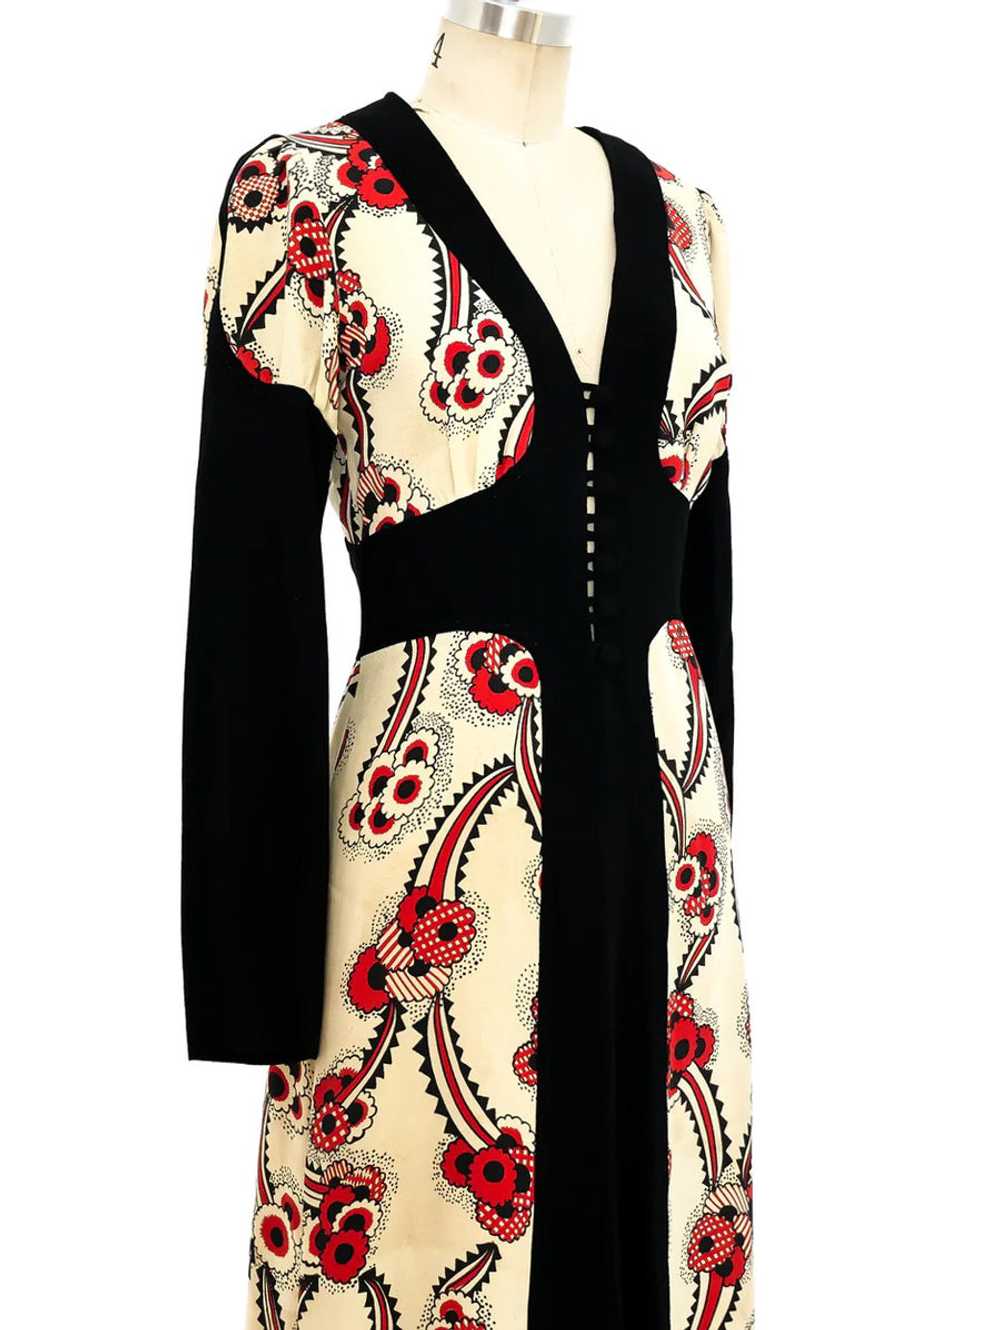 Ossie Clark Celia Birtwell Printed Crepe Dress - image 4